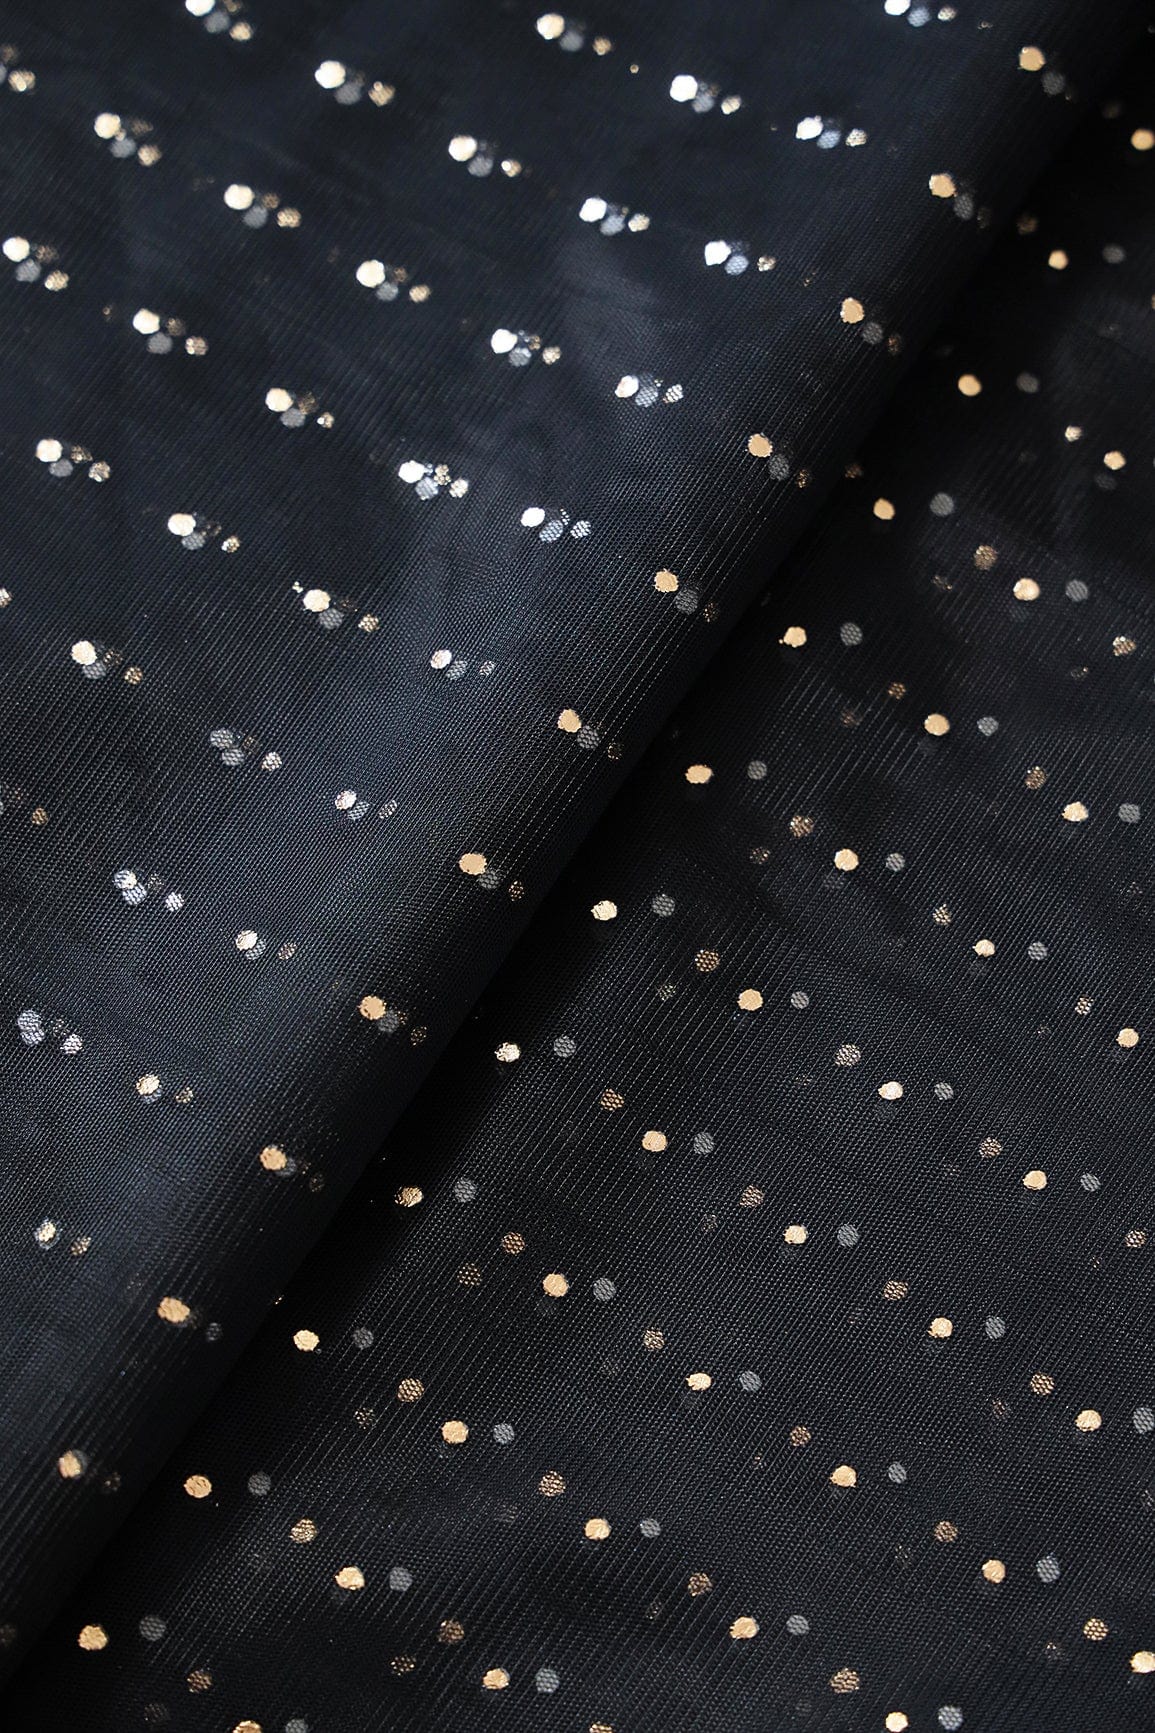 doeraa Embroidery Fabrics Black Golden Dew Drops Soft Net Fabric